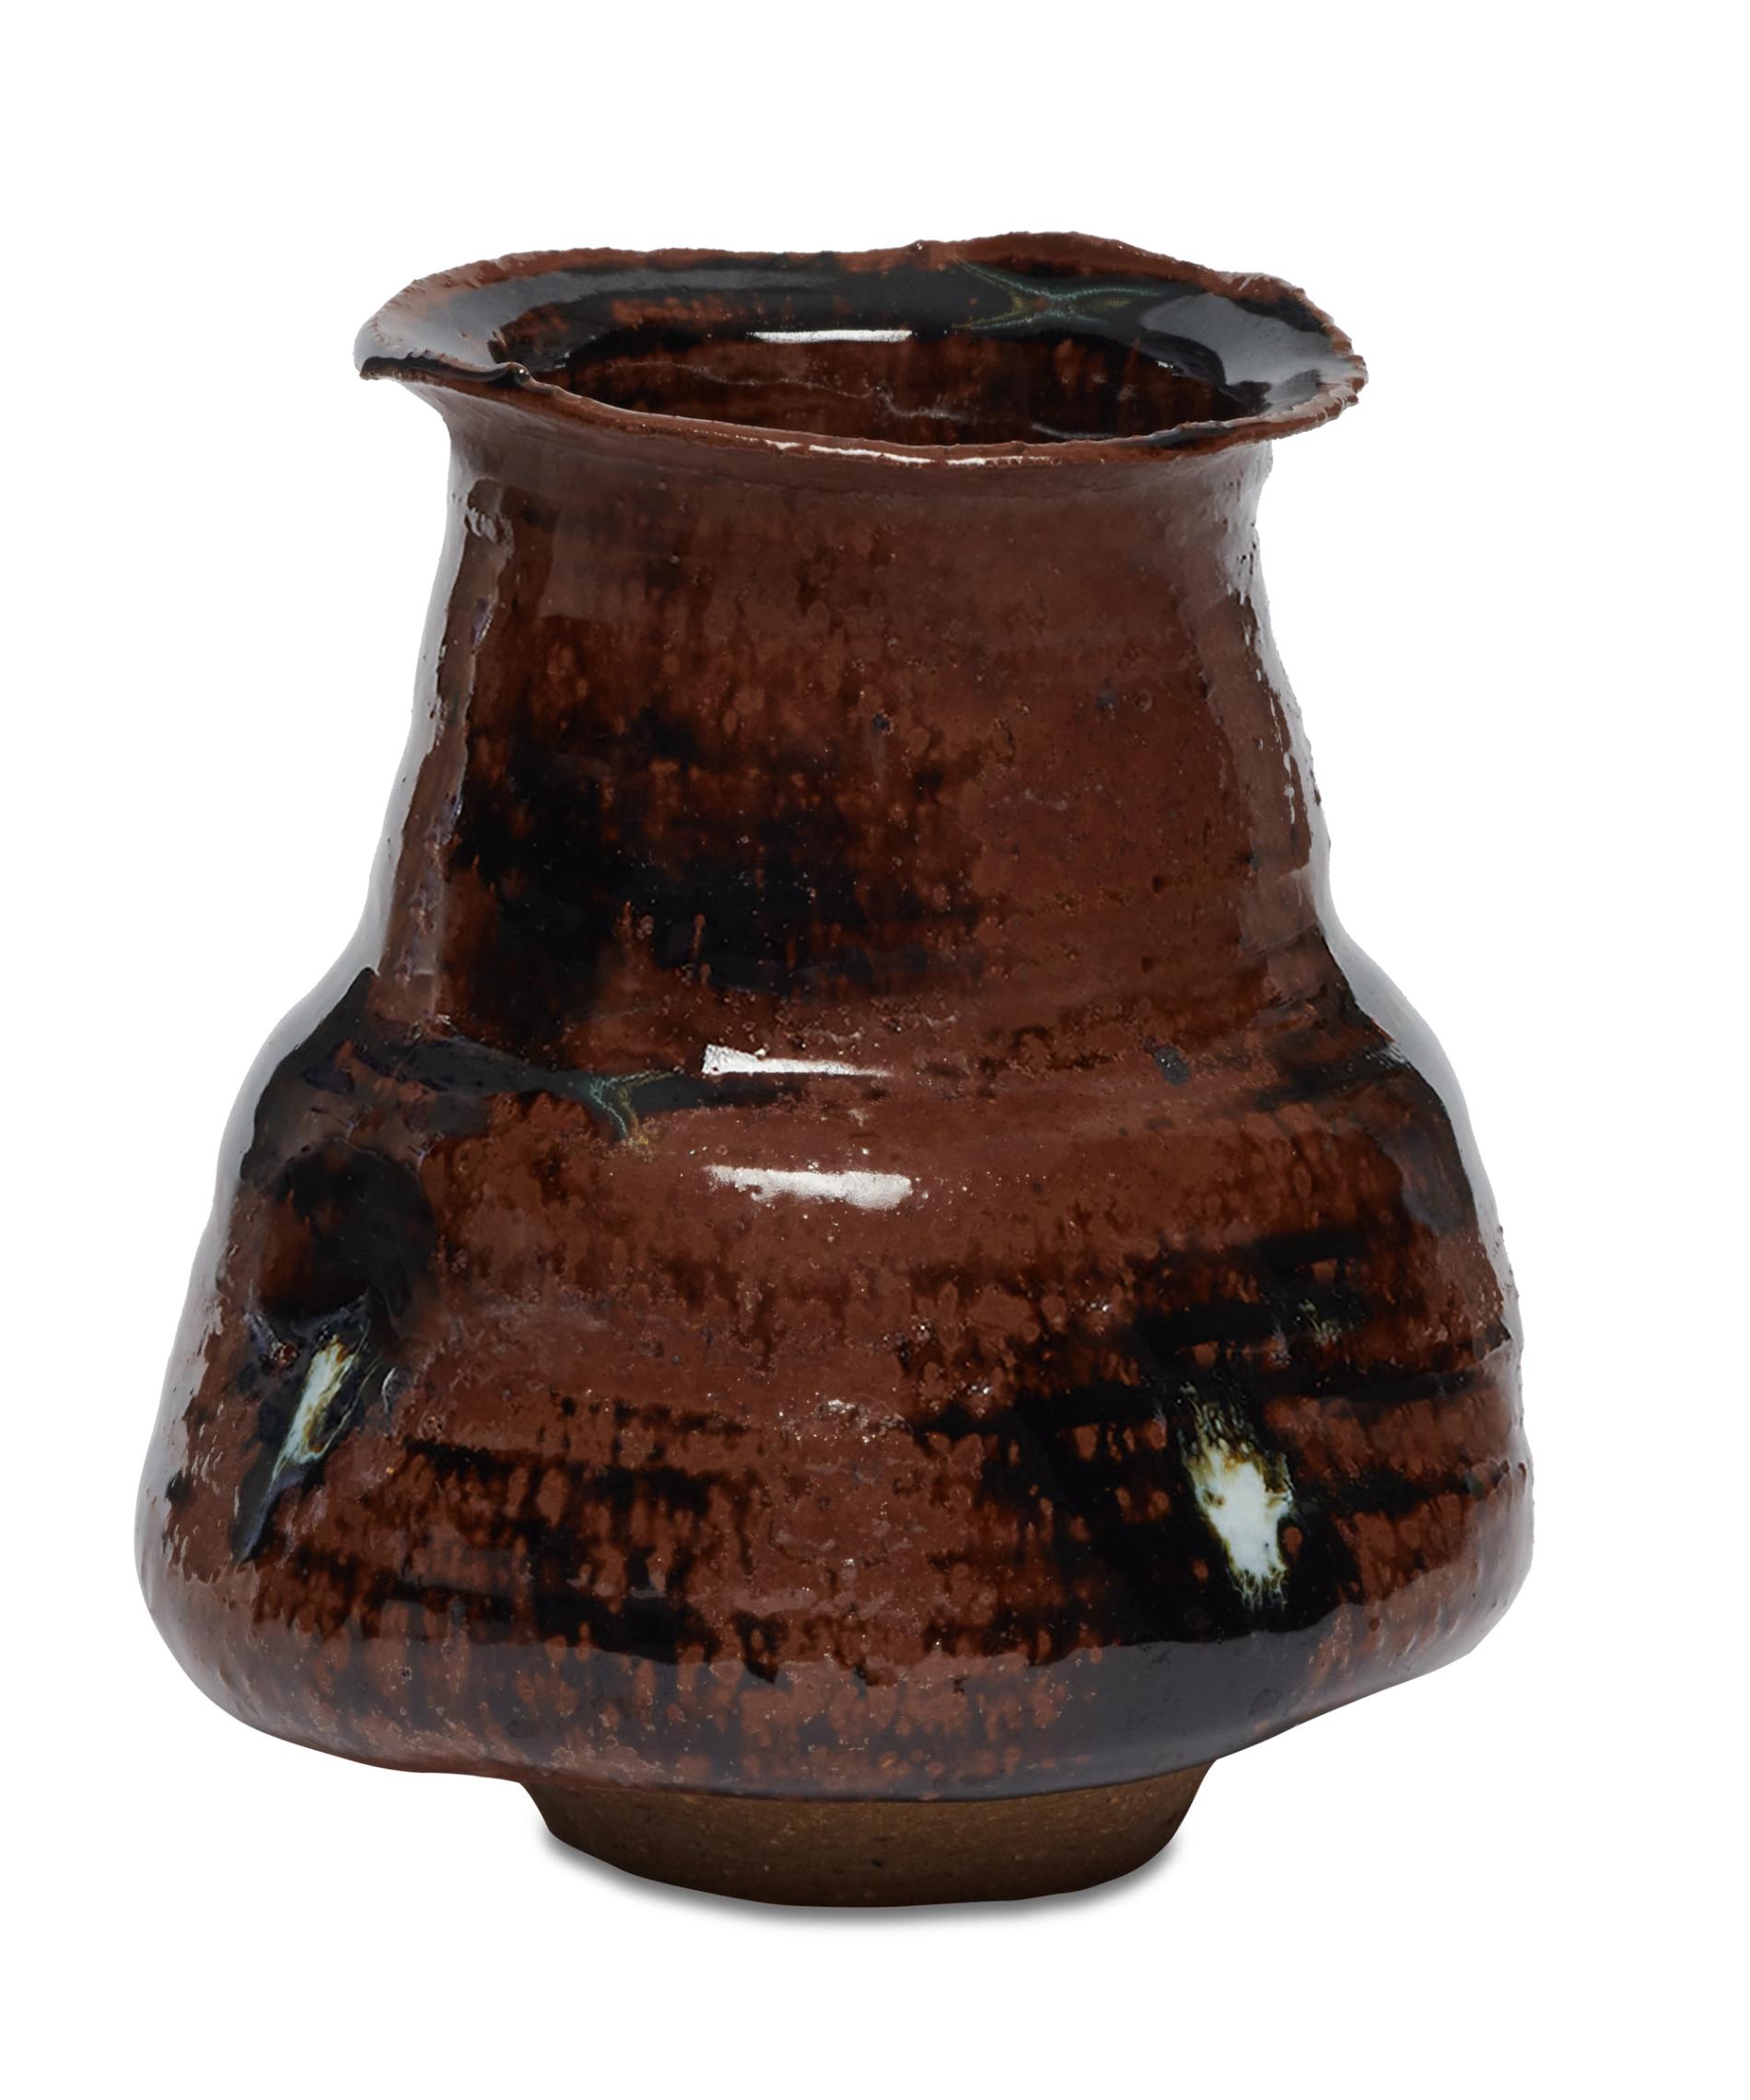 Lyson Marchessault, "Pannotia" Small Vase, 2020